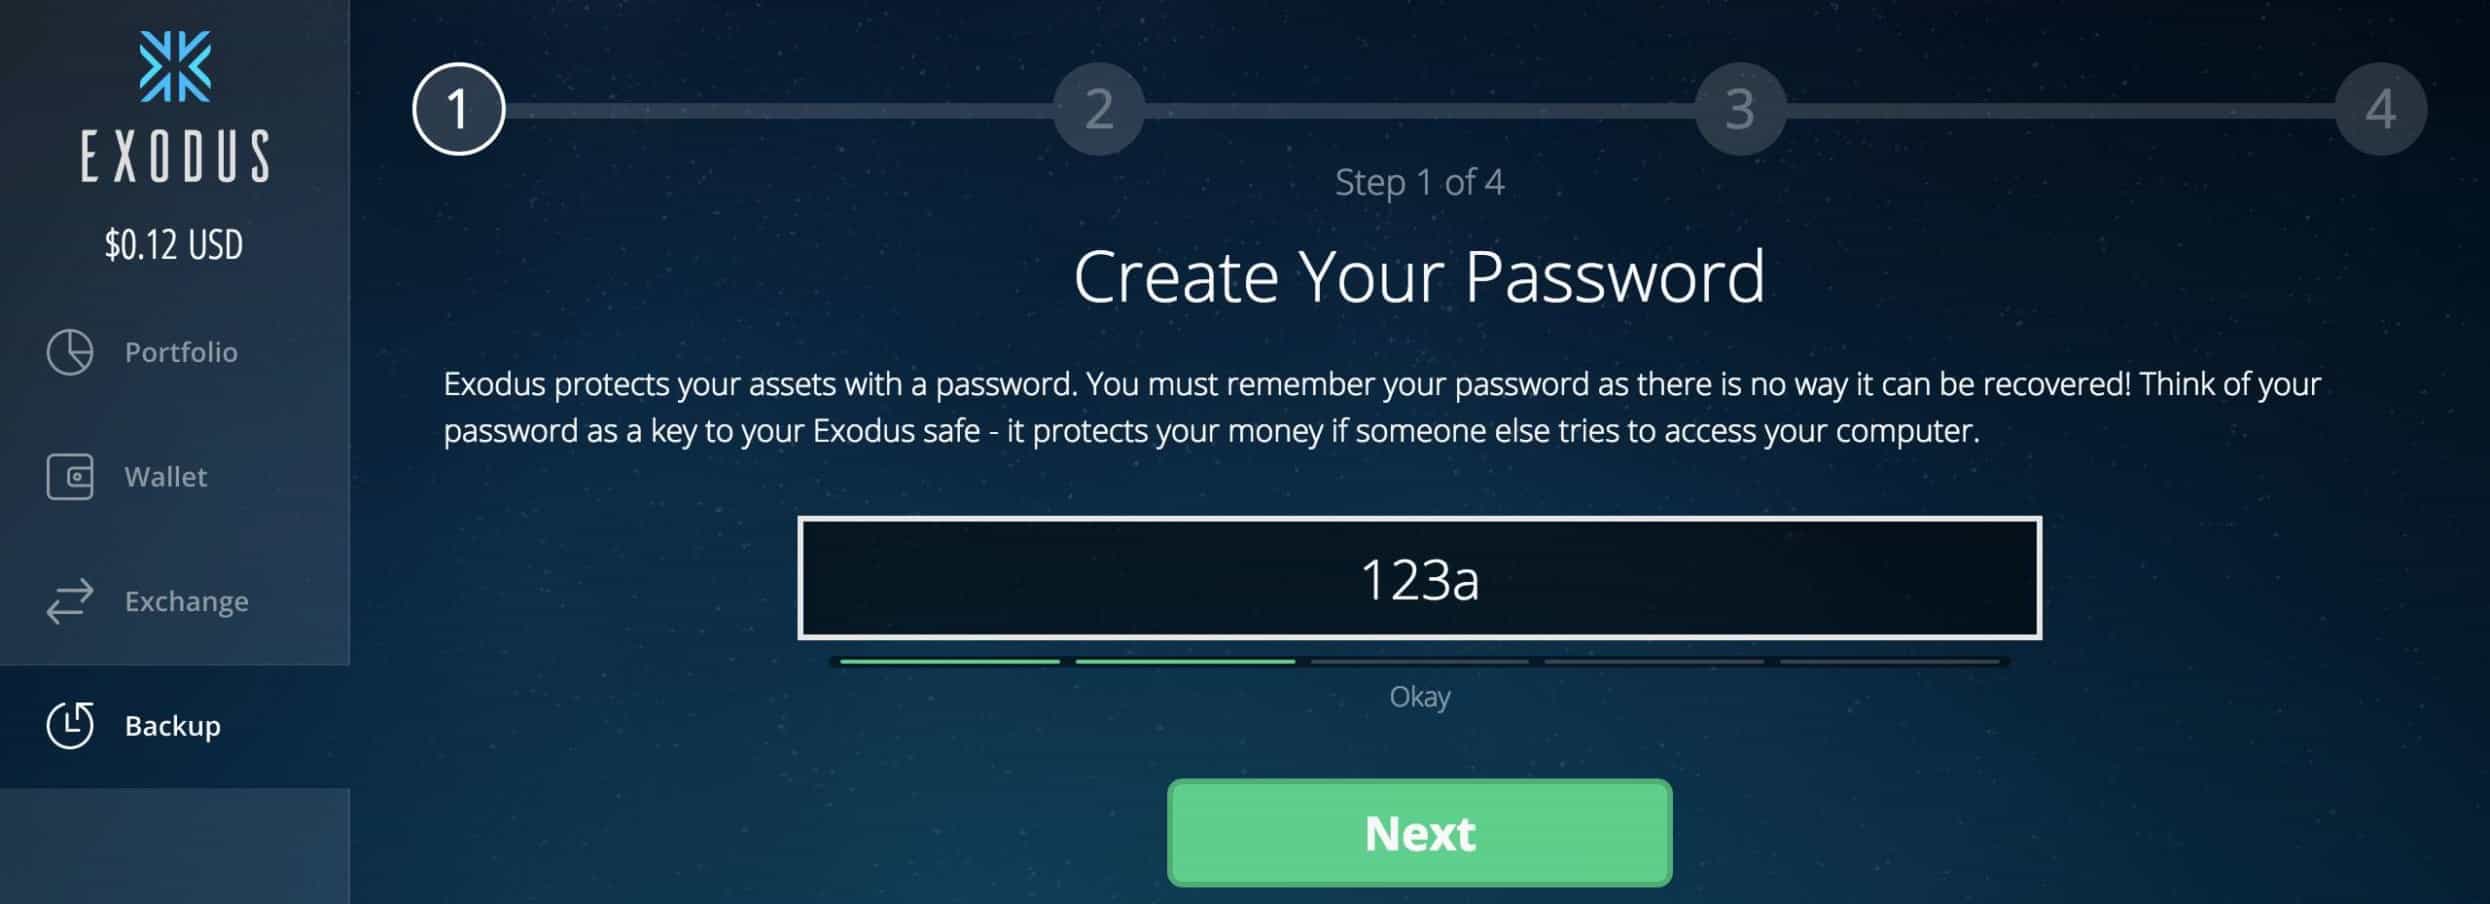 Exodus Wallet Has Bad Privacy & Security - BitEdge ...